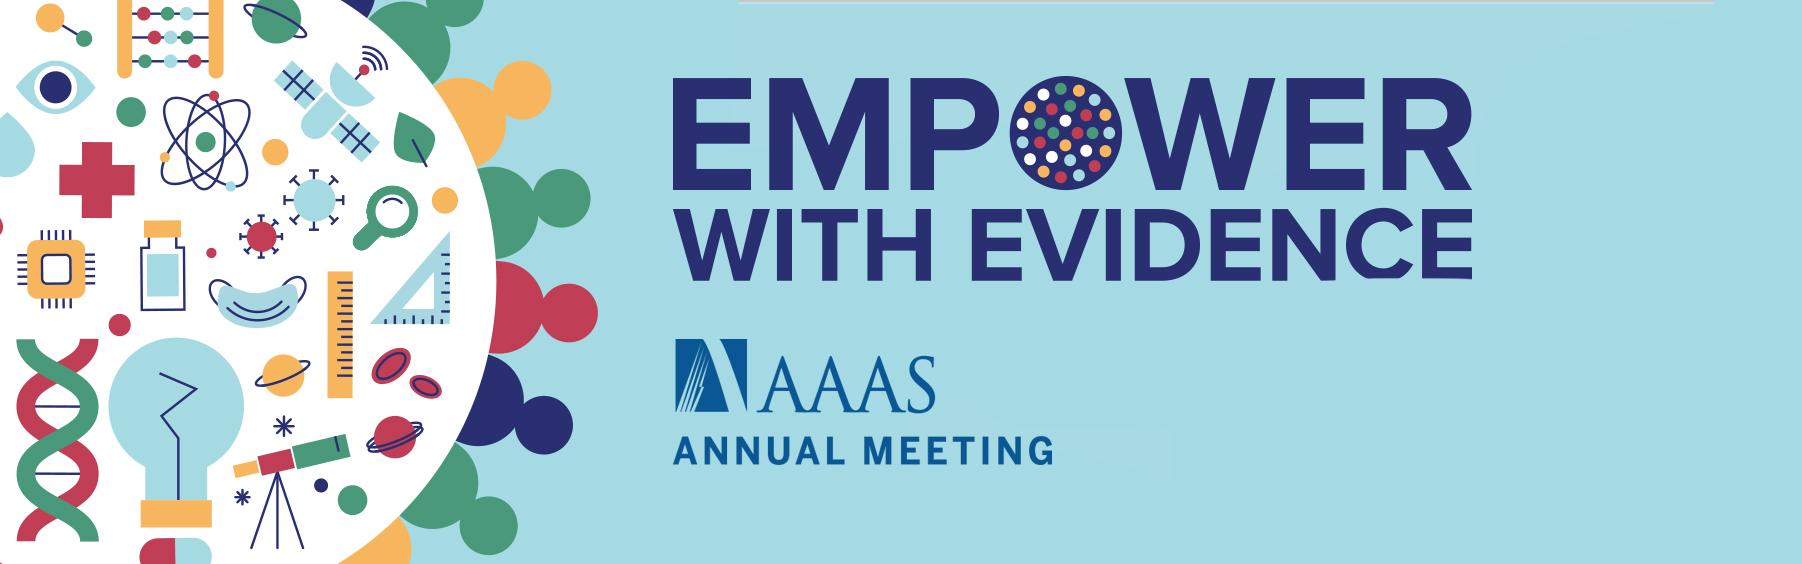 AAAS Annual Meeting logo